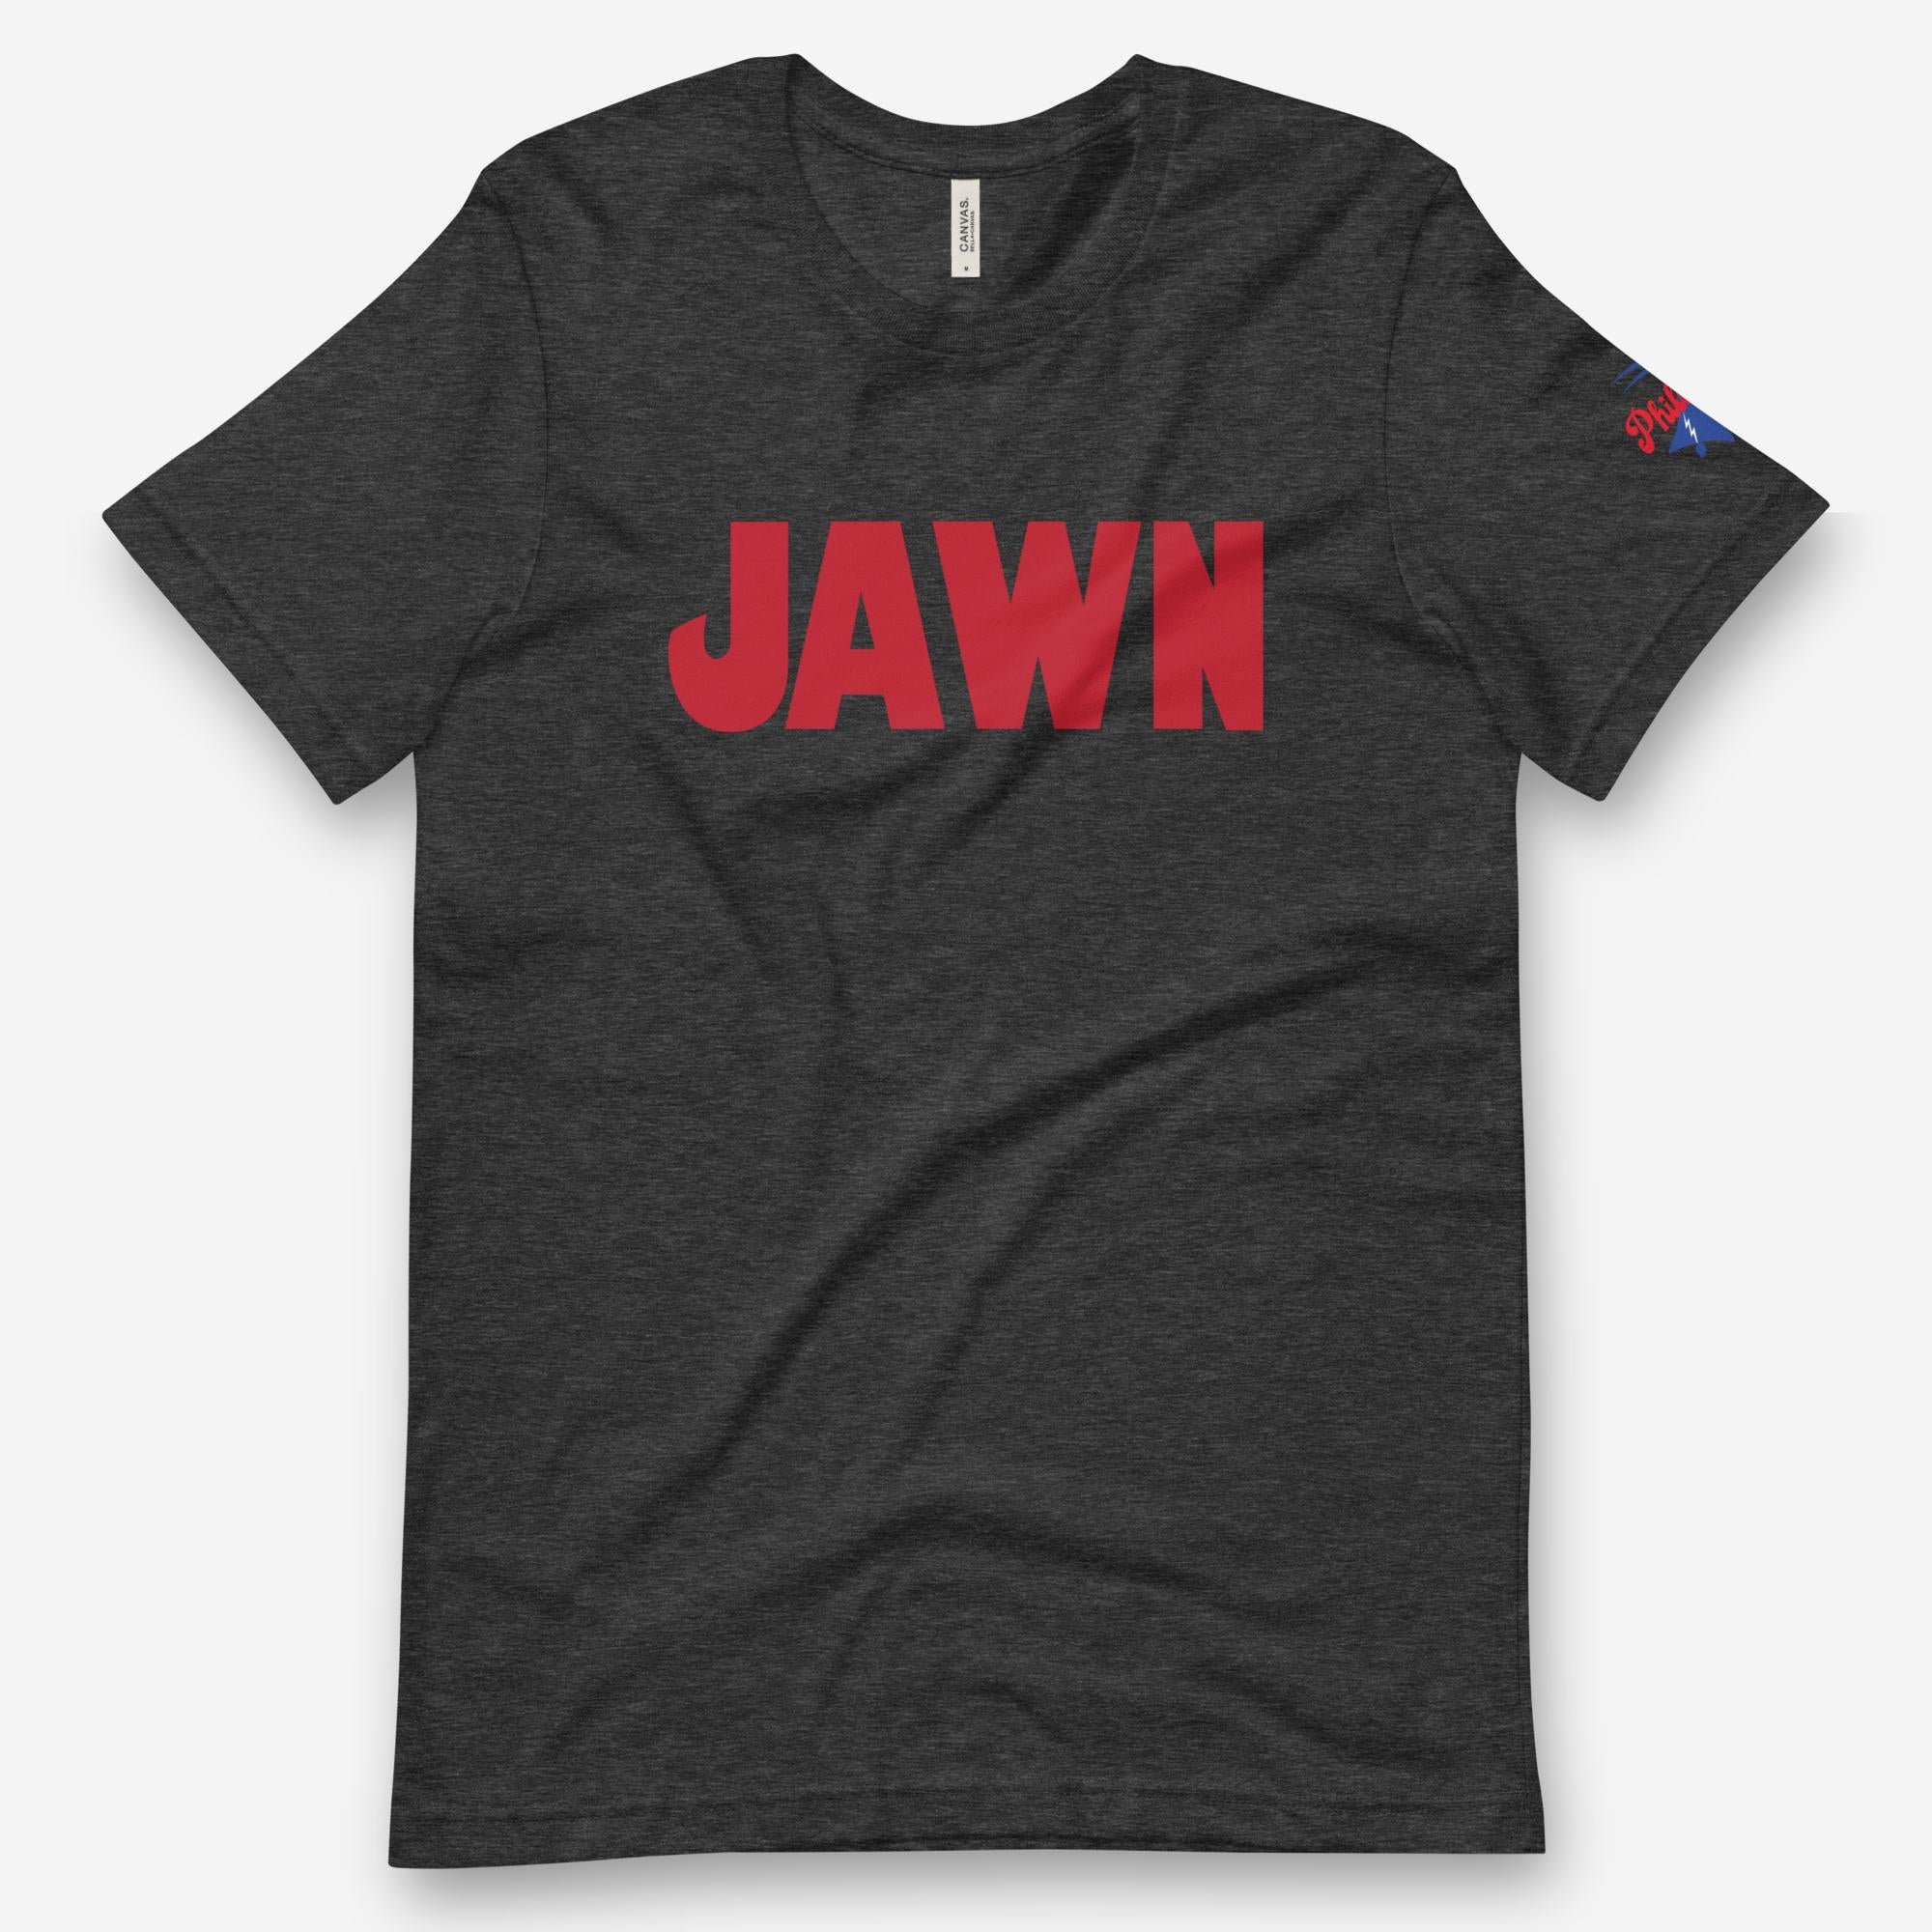 "Jaws Jawn" Tee